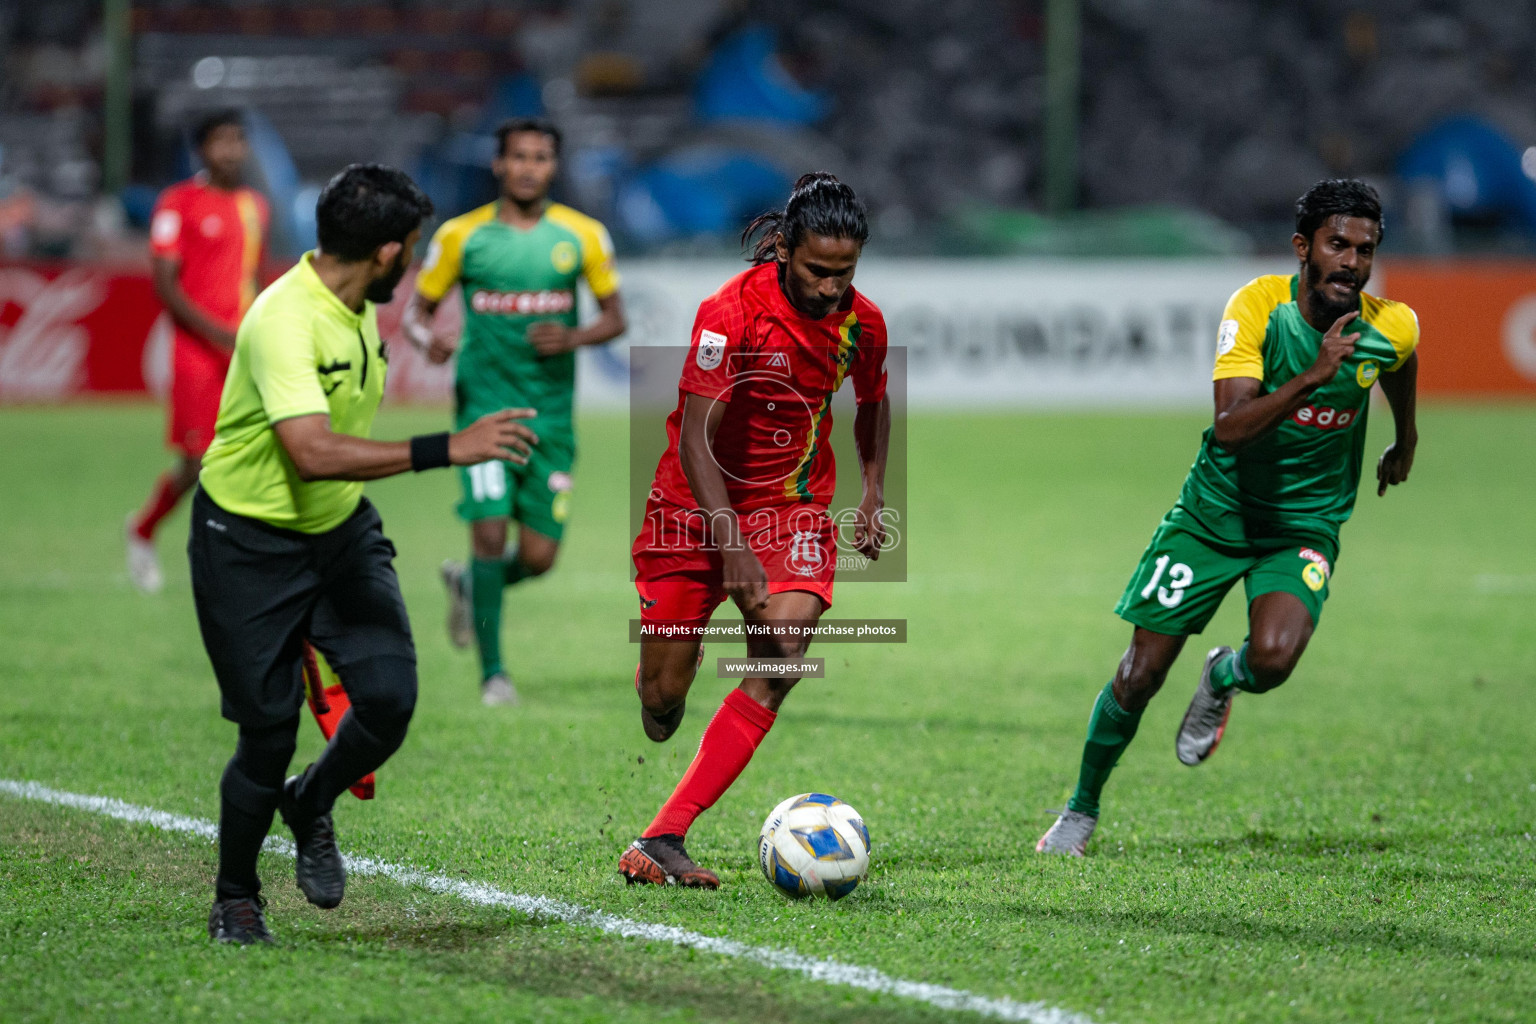 Maziya SRC vs Da Grande SC in Dhiraagu Dhivehi Premier League 2020-21 on 03 January 2021 held in Male', Maldives